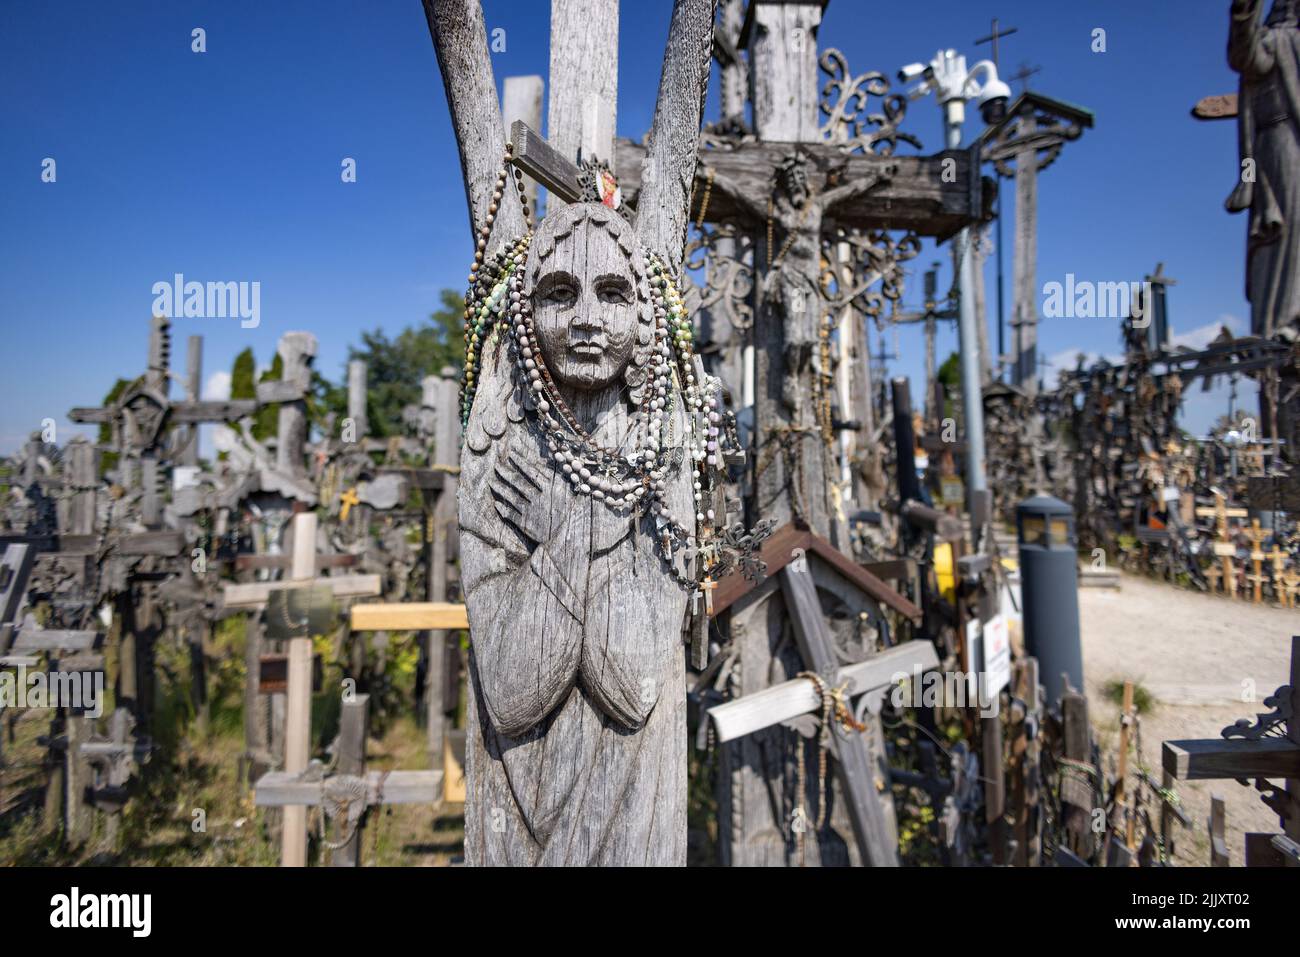 Cultura de Lituania; Colina de cruces Lituania; miles de tallas y cruces en una ladera, un lugar de peregrinación religiosa, Lituania Europa Foto de stock